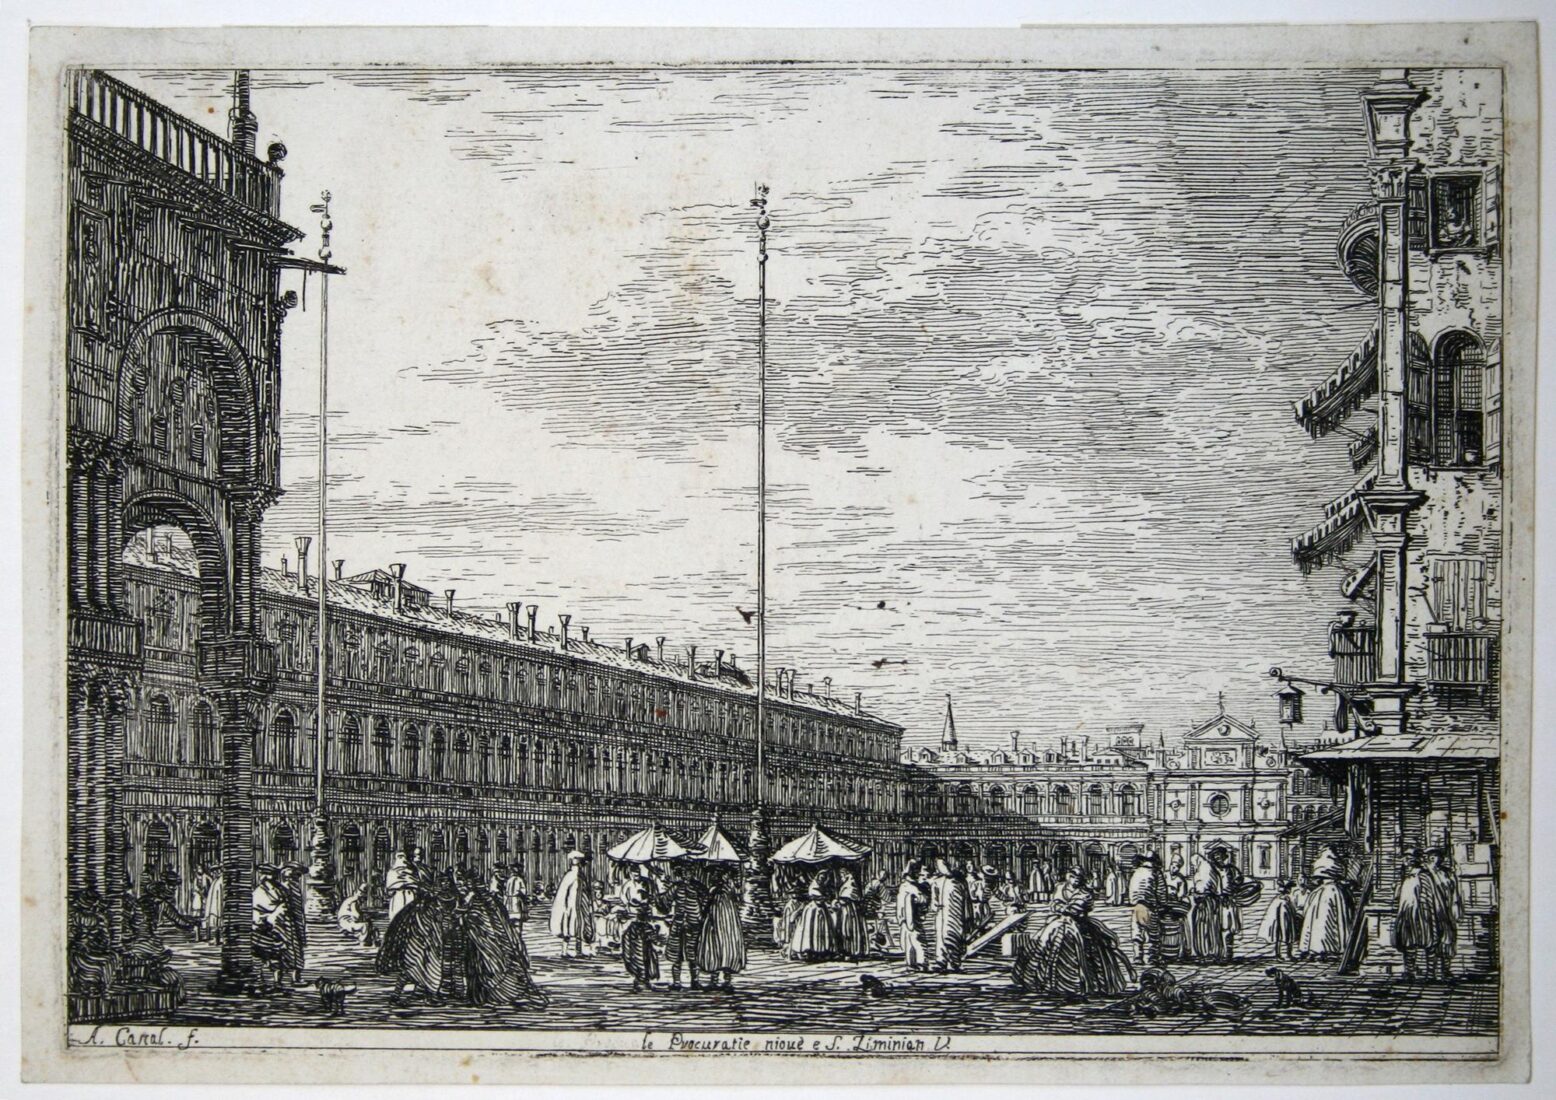 Procuratie Nuove and San Geminiano, Venice - Canal (Canaletto) Antonio